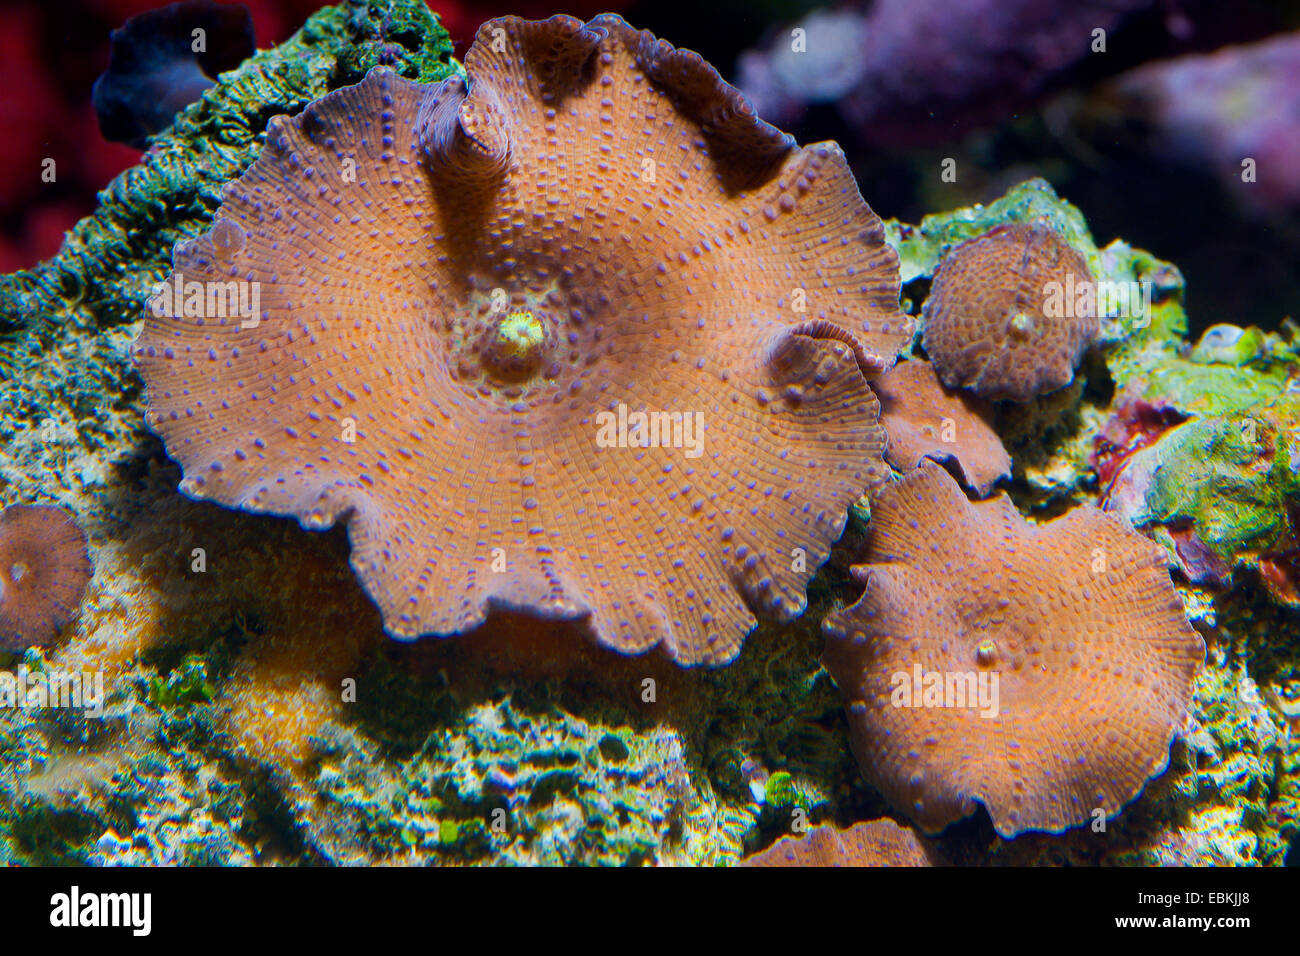 mushroom-coral-discosoma-spec-three-brow